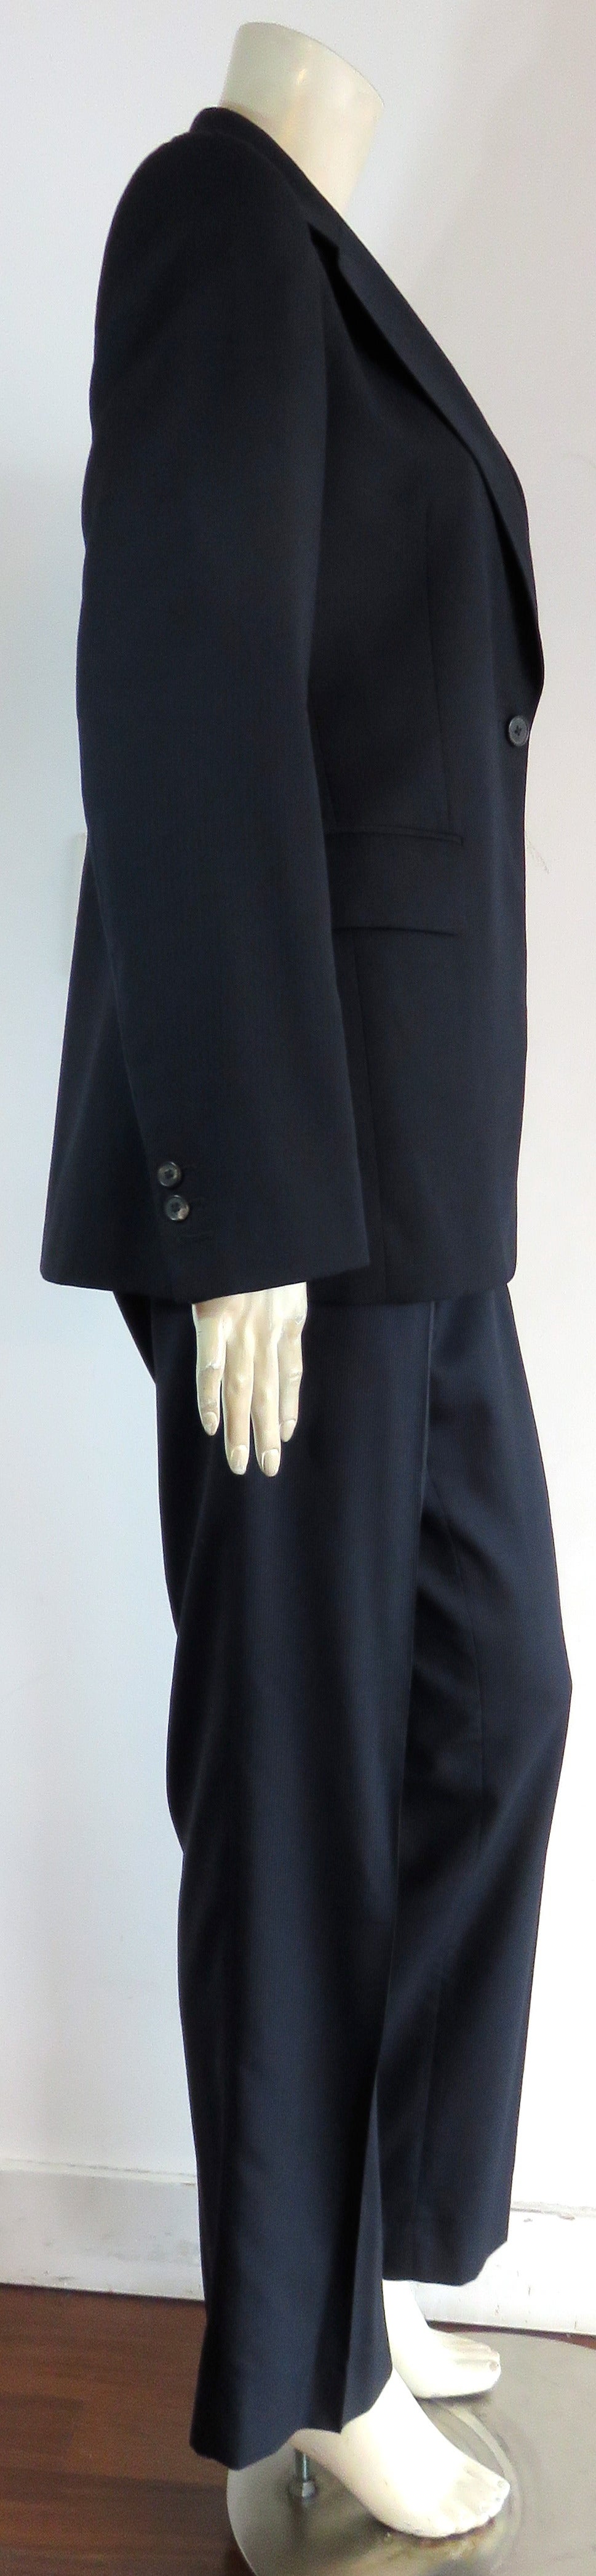 MARTIN MARGIELA Replica of 1970's garçon pant suit 1